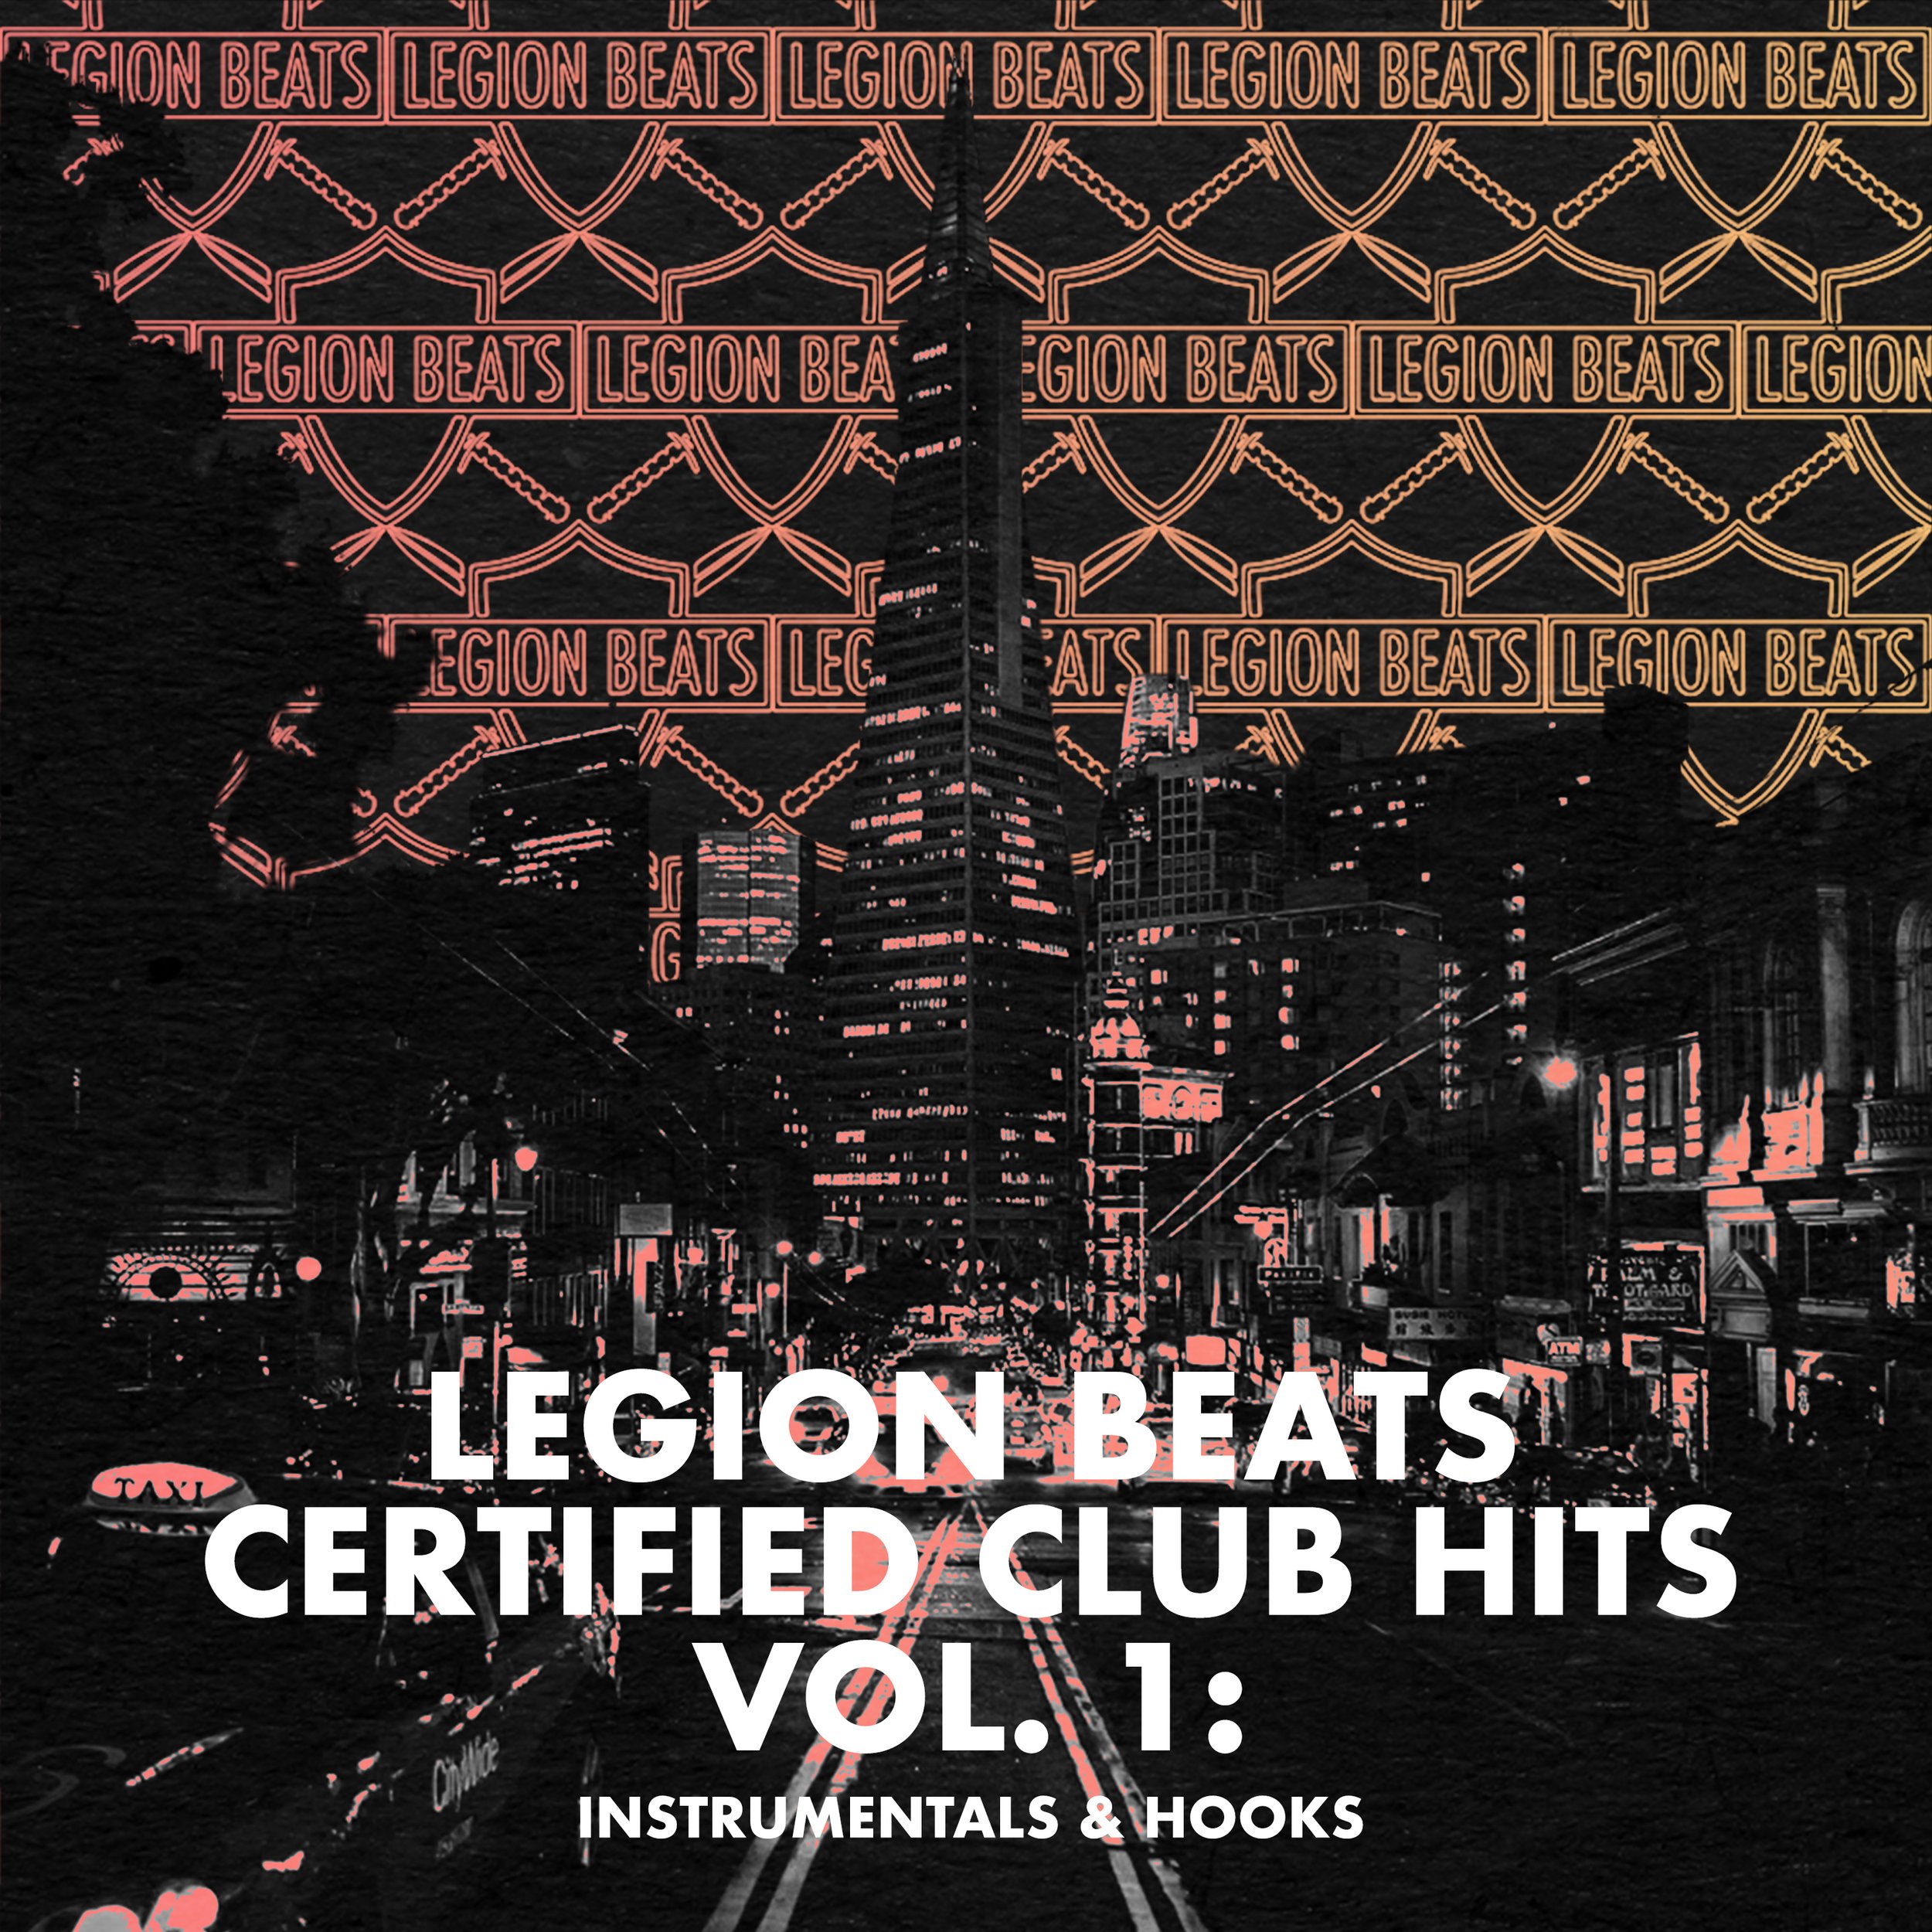 3-26-18 BEAT PACK TEMPLATE - certified club hits vol 1.jpg